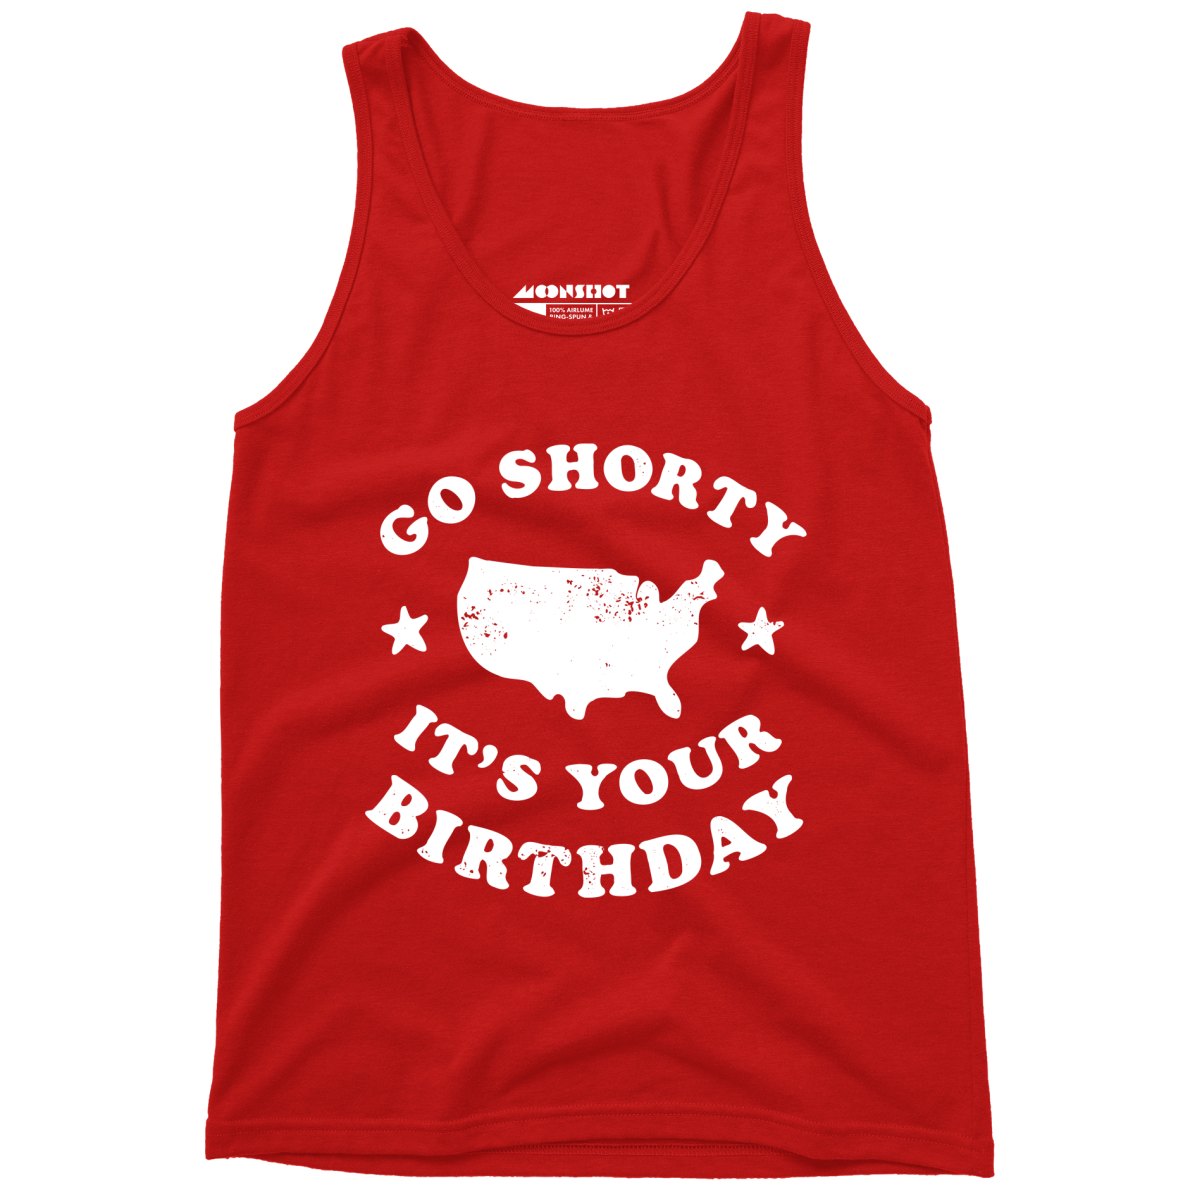 Go Shorty It's Your Birthday - Unisex Tank Top